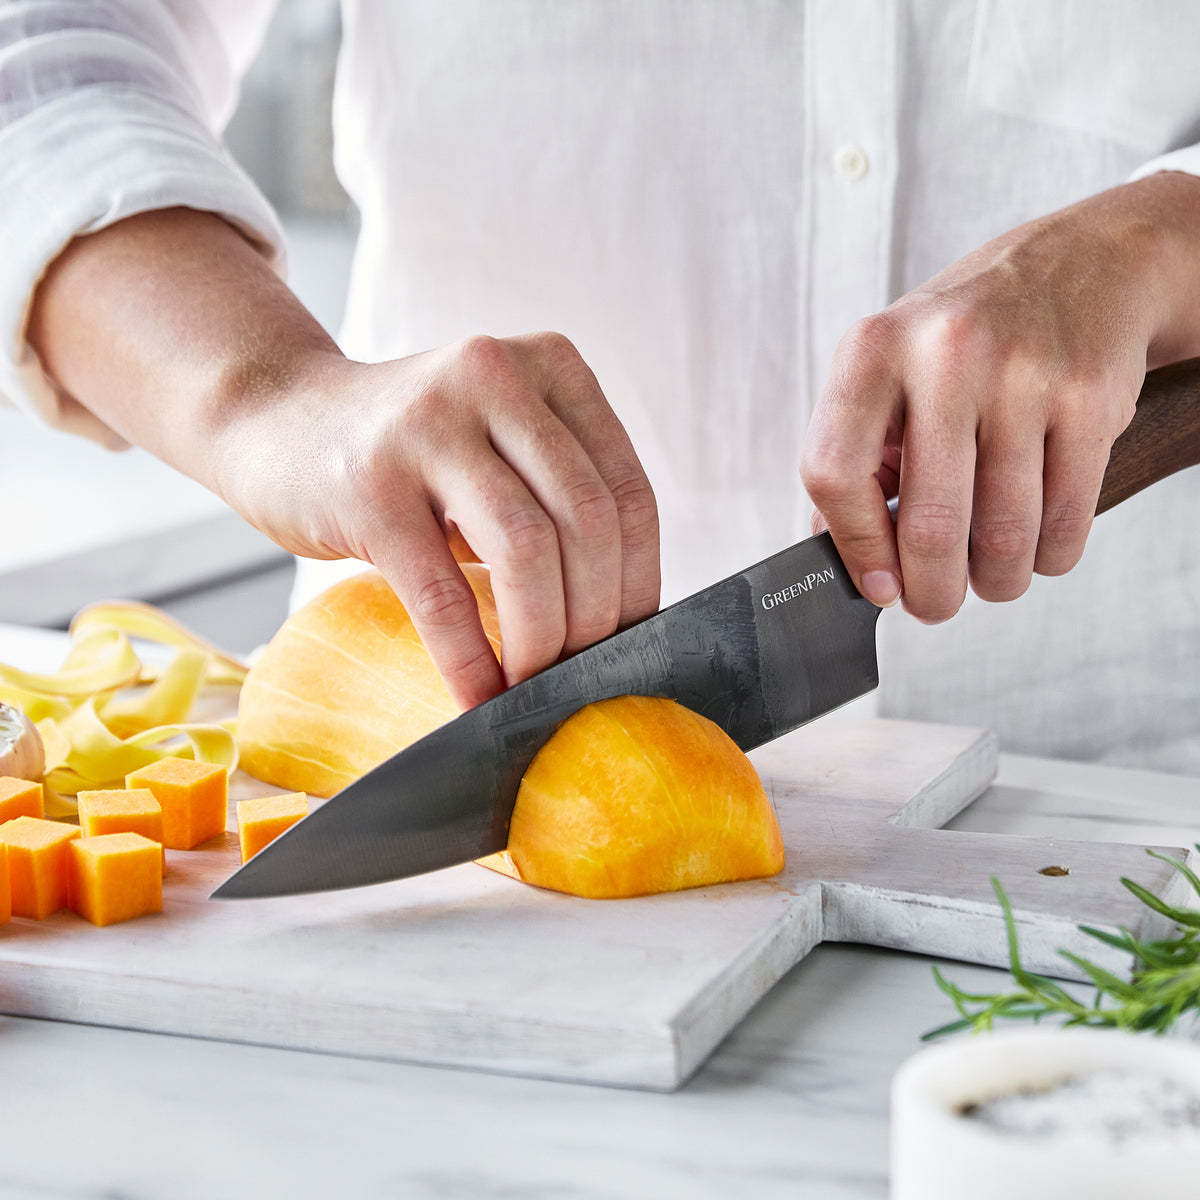 Titanium Cutlery 8 Chef's Knife